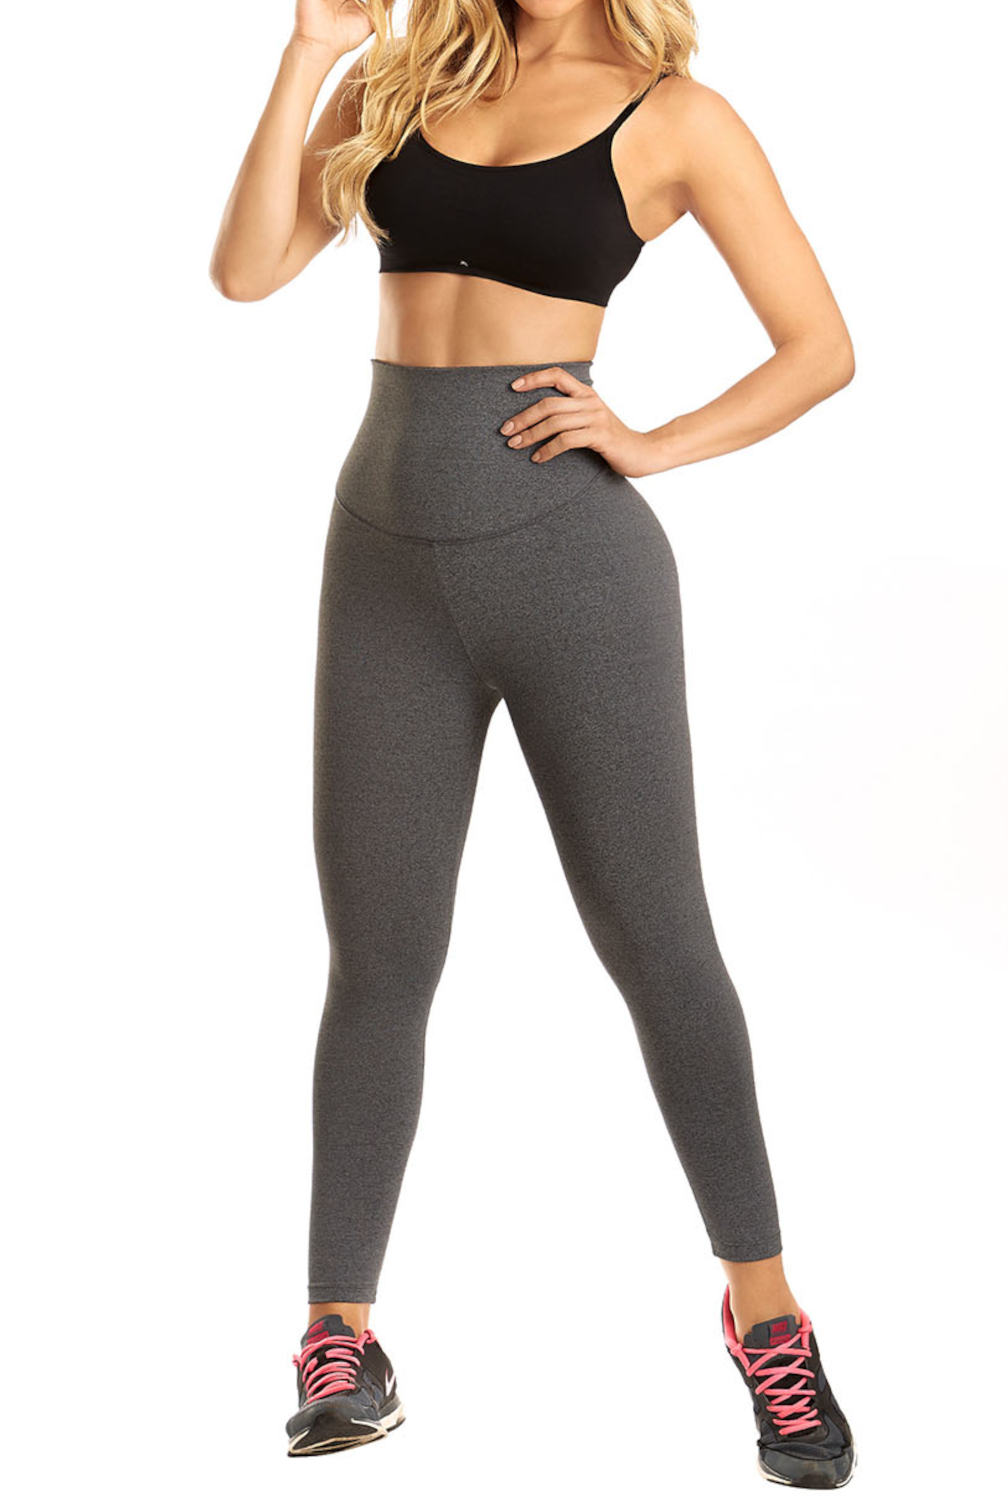 NELEUS Womens High Rise Yoga Leggings Seamless Ankle Workout Compression  Pants,Black+Gray+Light Blue,US Size 2XL 